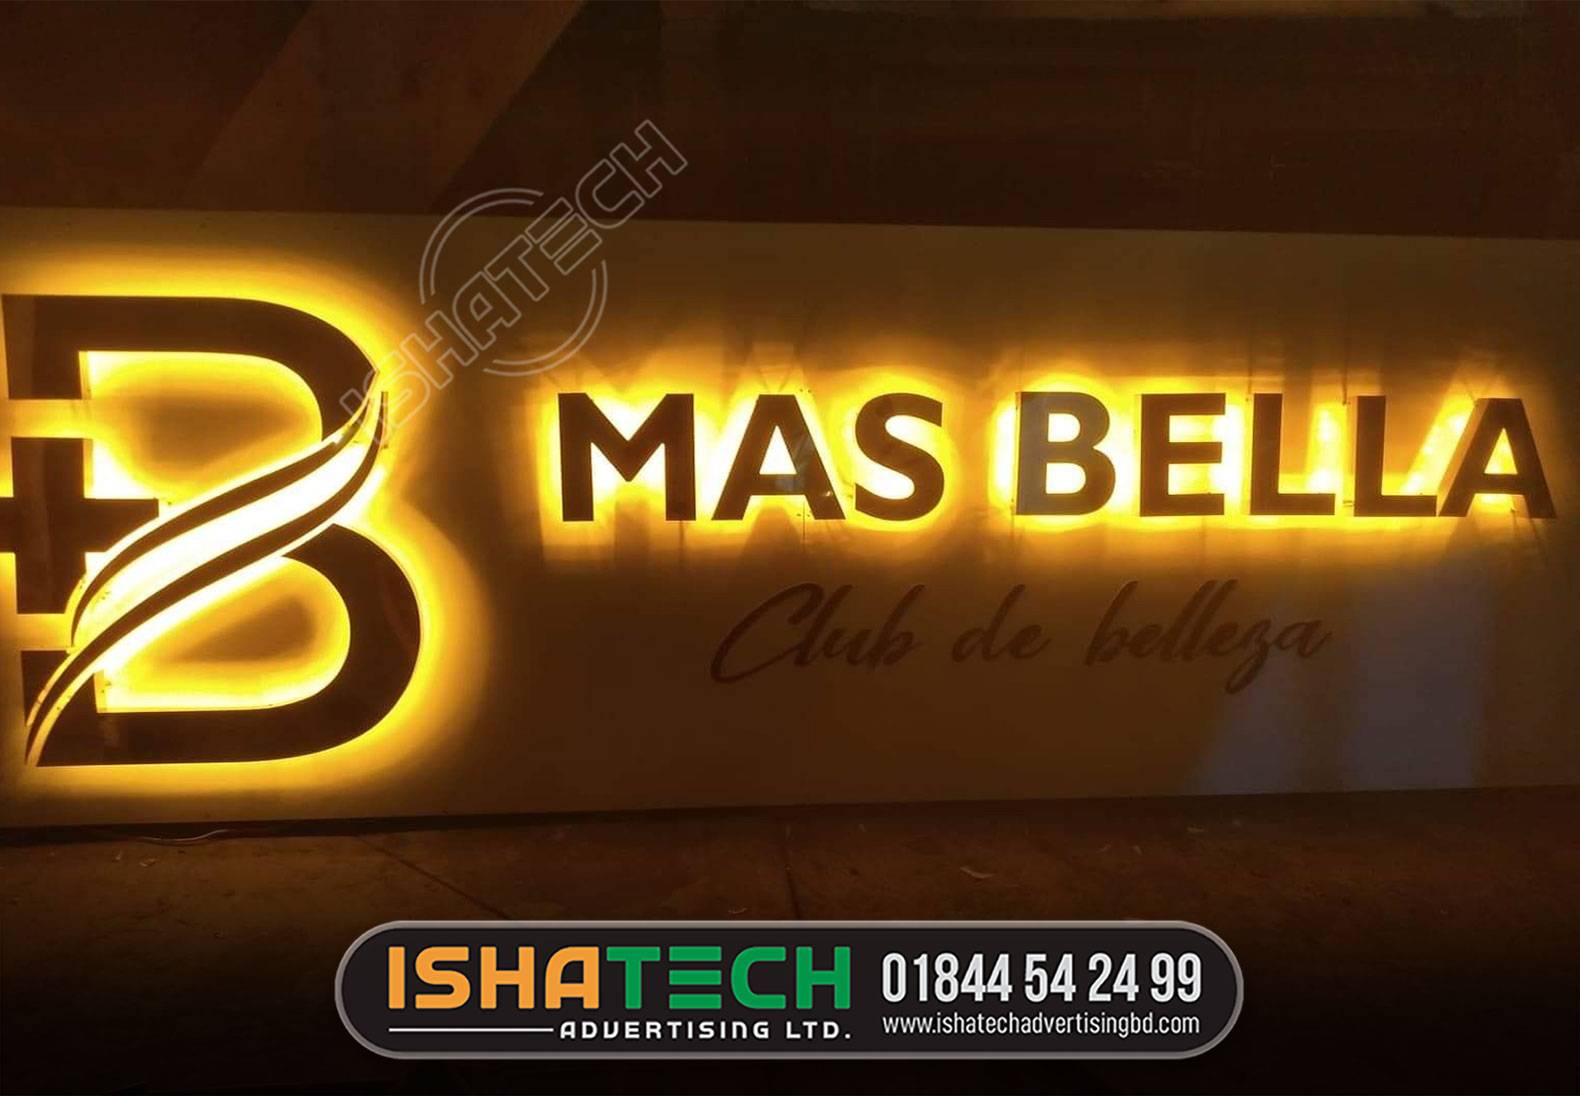 B MAS BELLA OFFICE GOLDEN COLOR BACKLIGHT LETTER SIGNAGE MAKING BD | LIGHTING Aluminum Signs IN DHAKA, CHITTAGONG BD